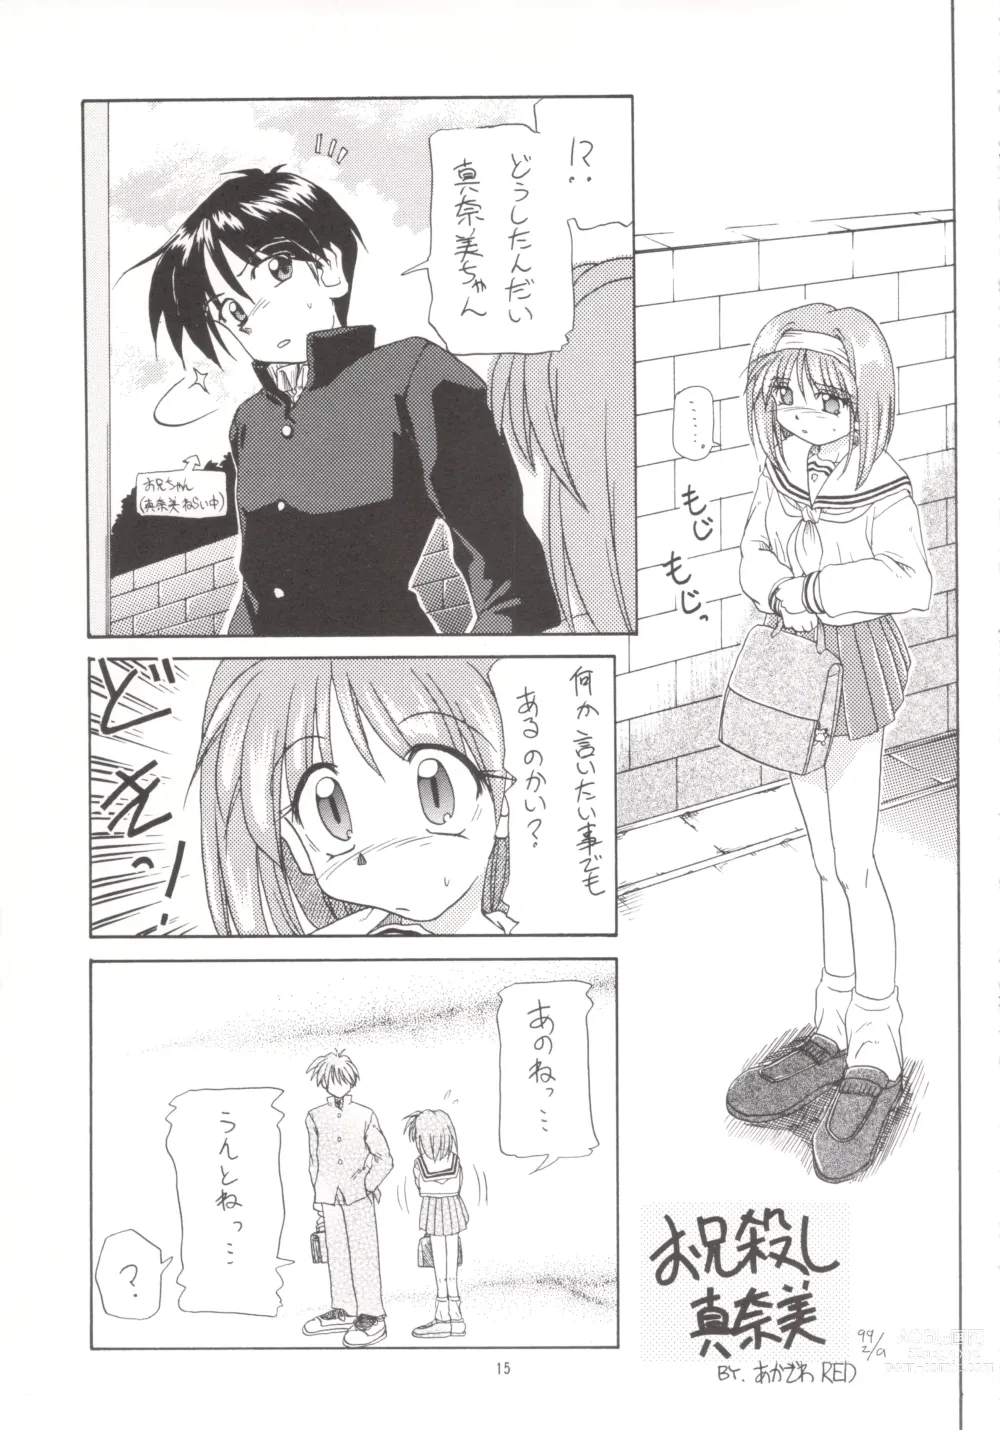 Page 14 of doujinshi Manami C-SPEC